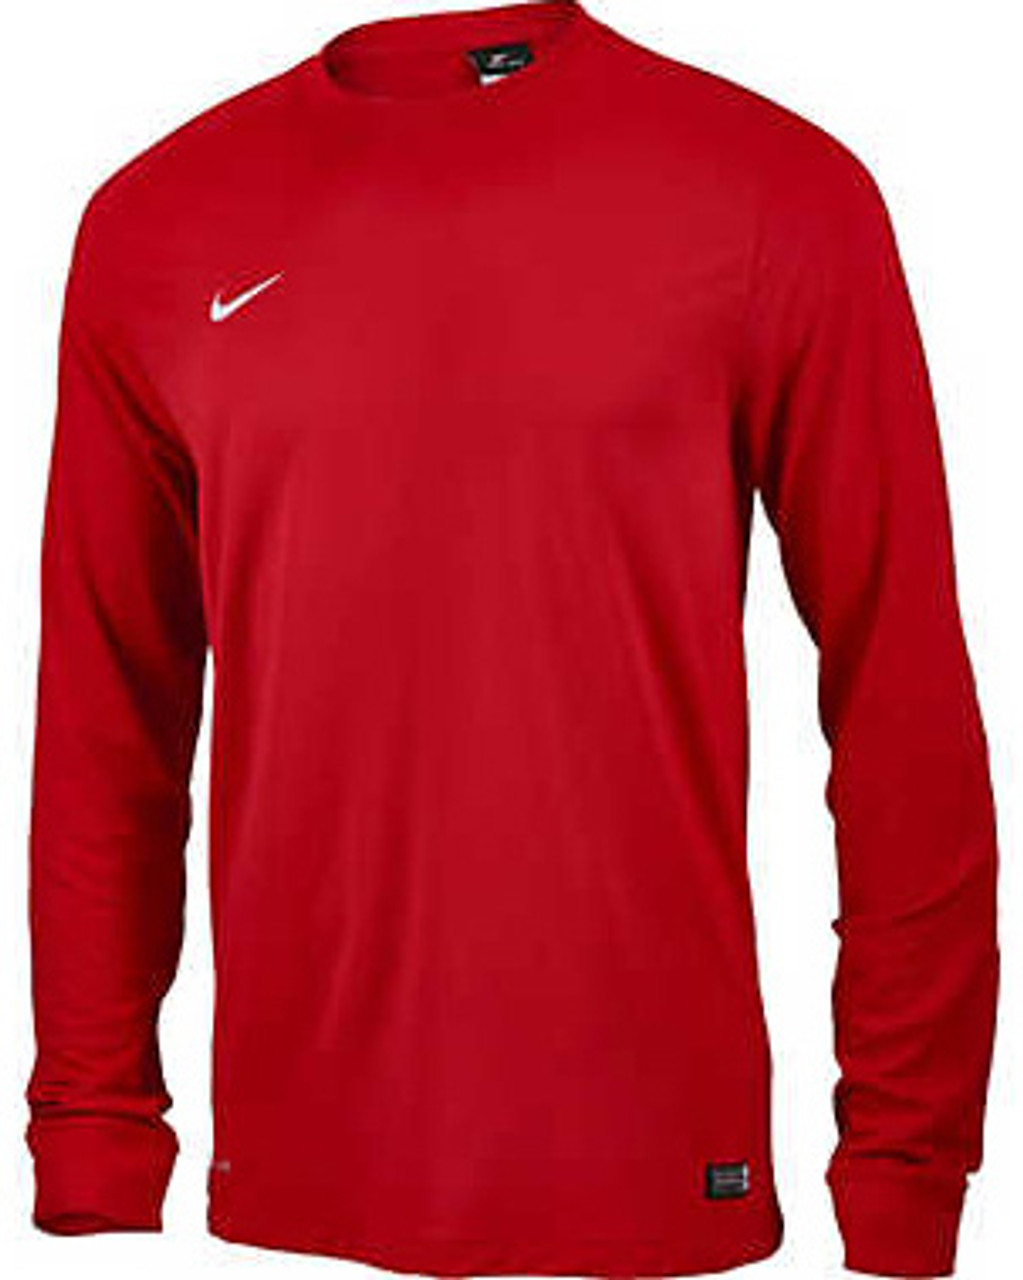 Blank Red Goalkeeper Jersey